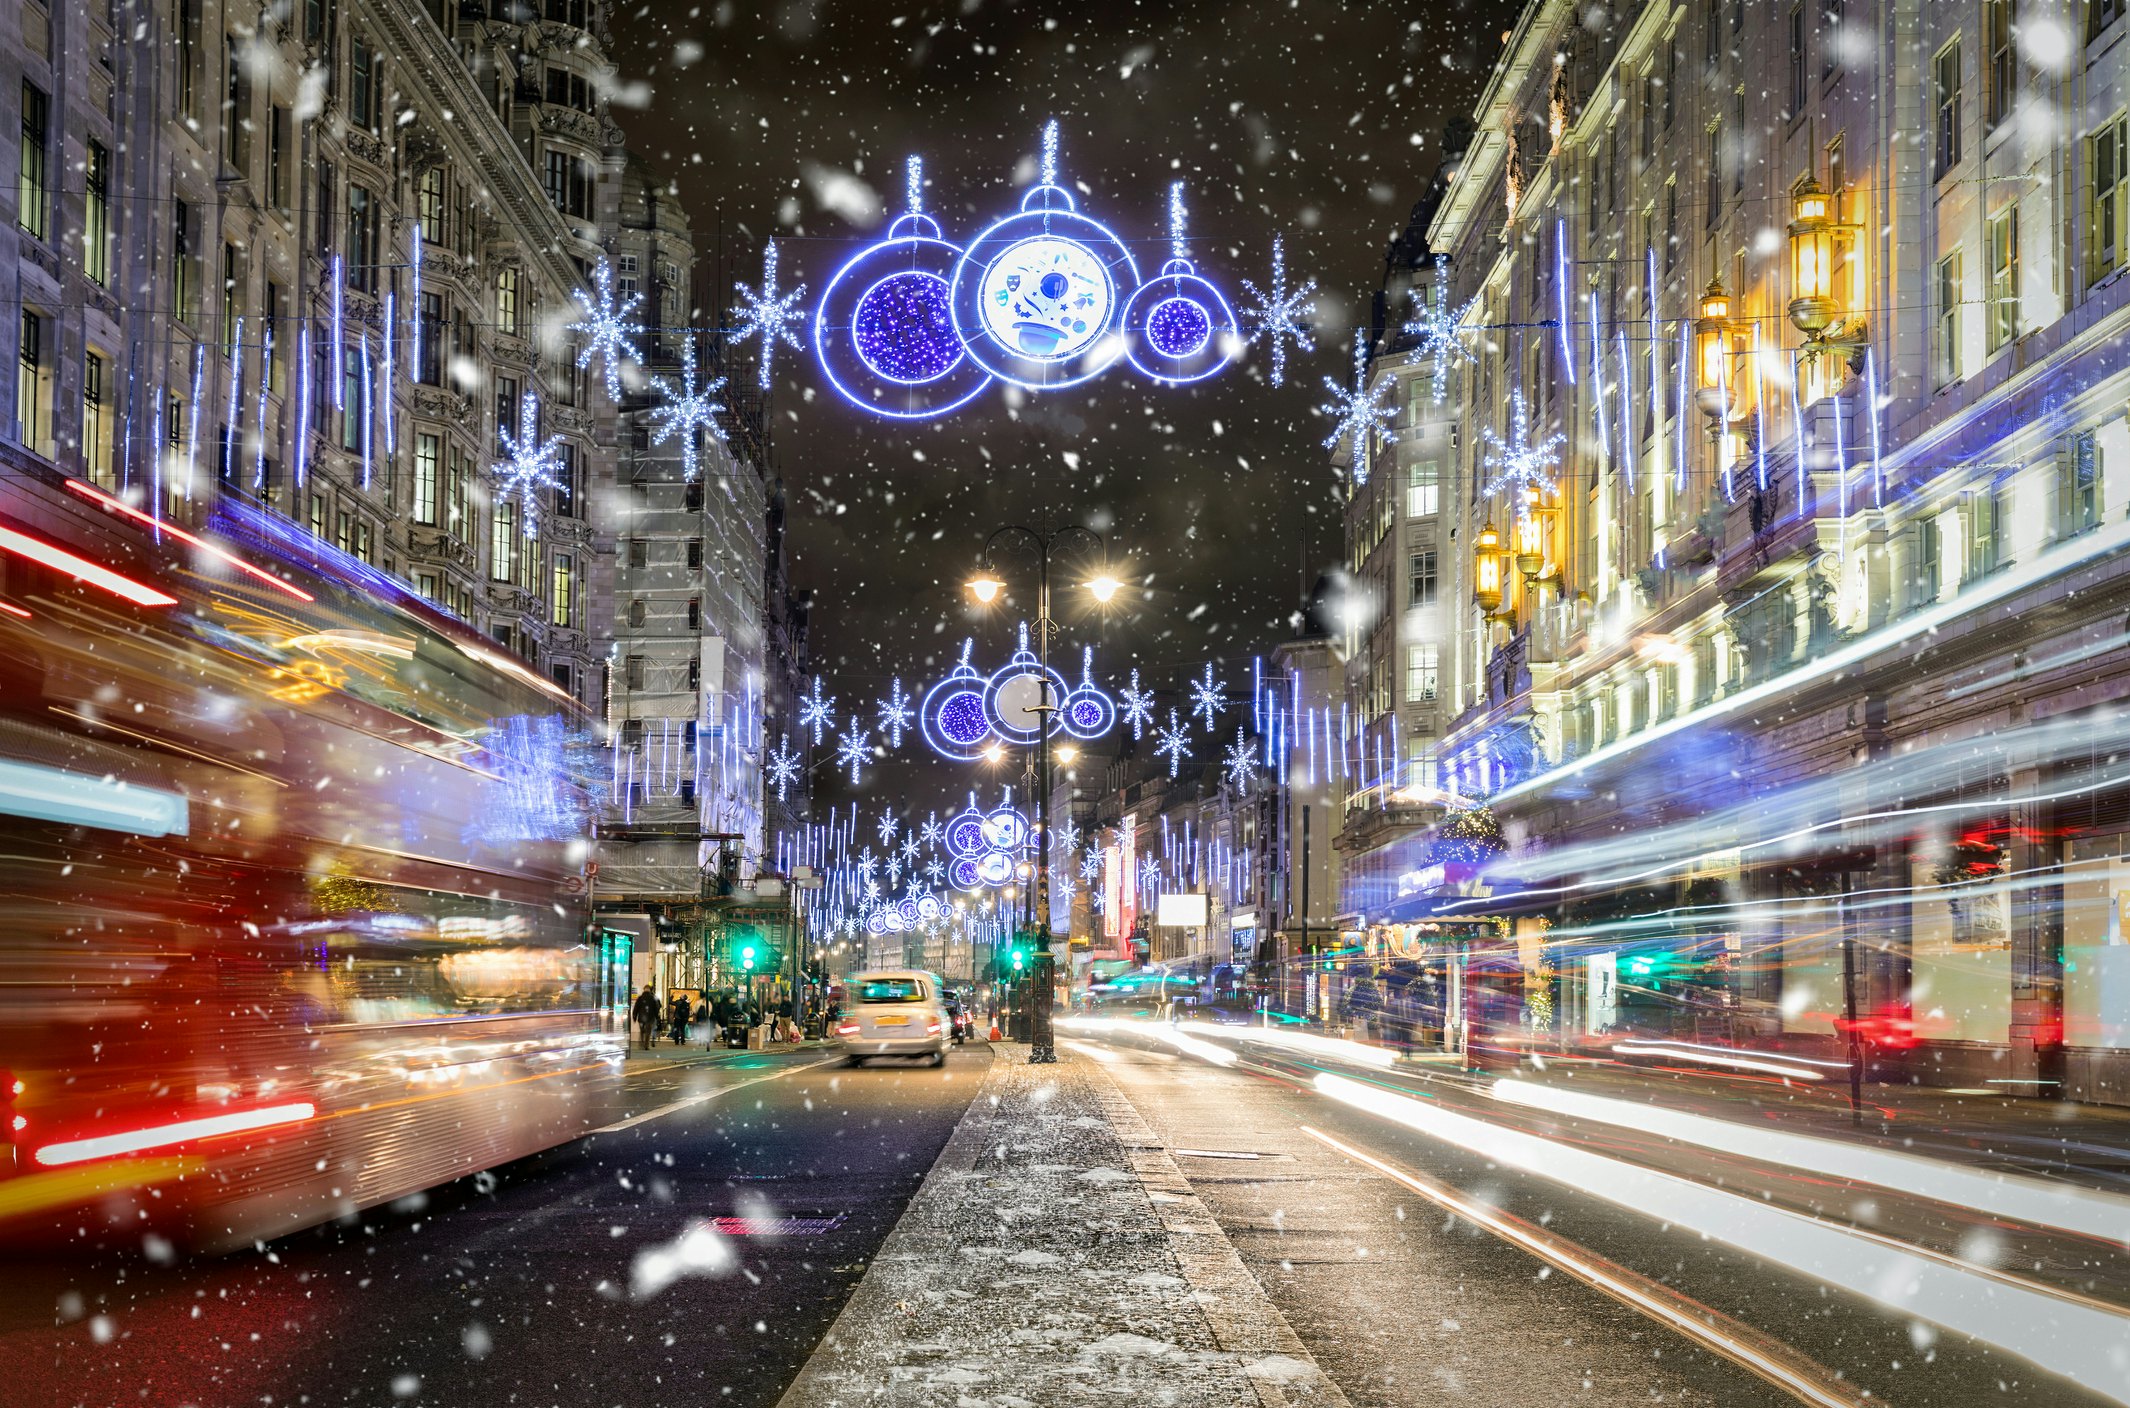 shopping high street in London in winter